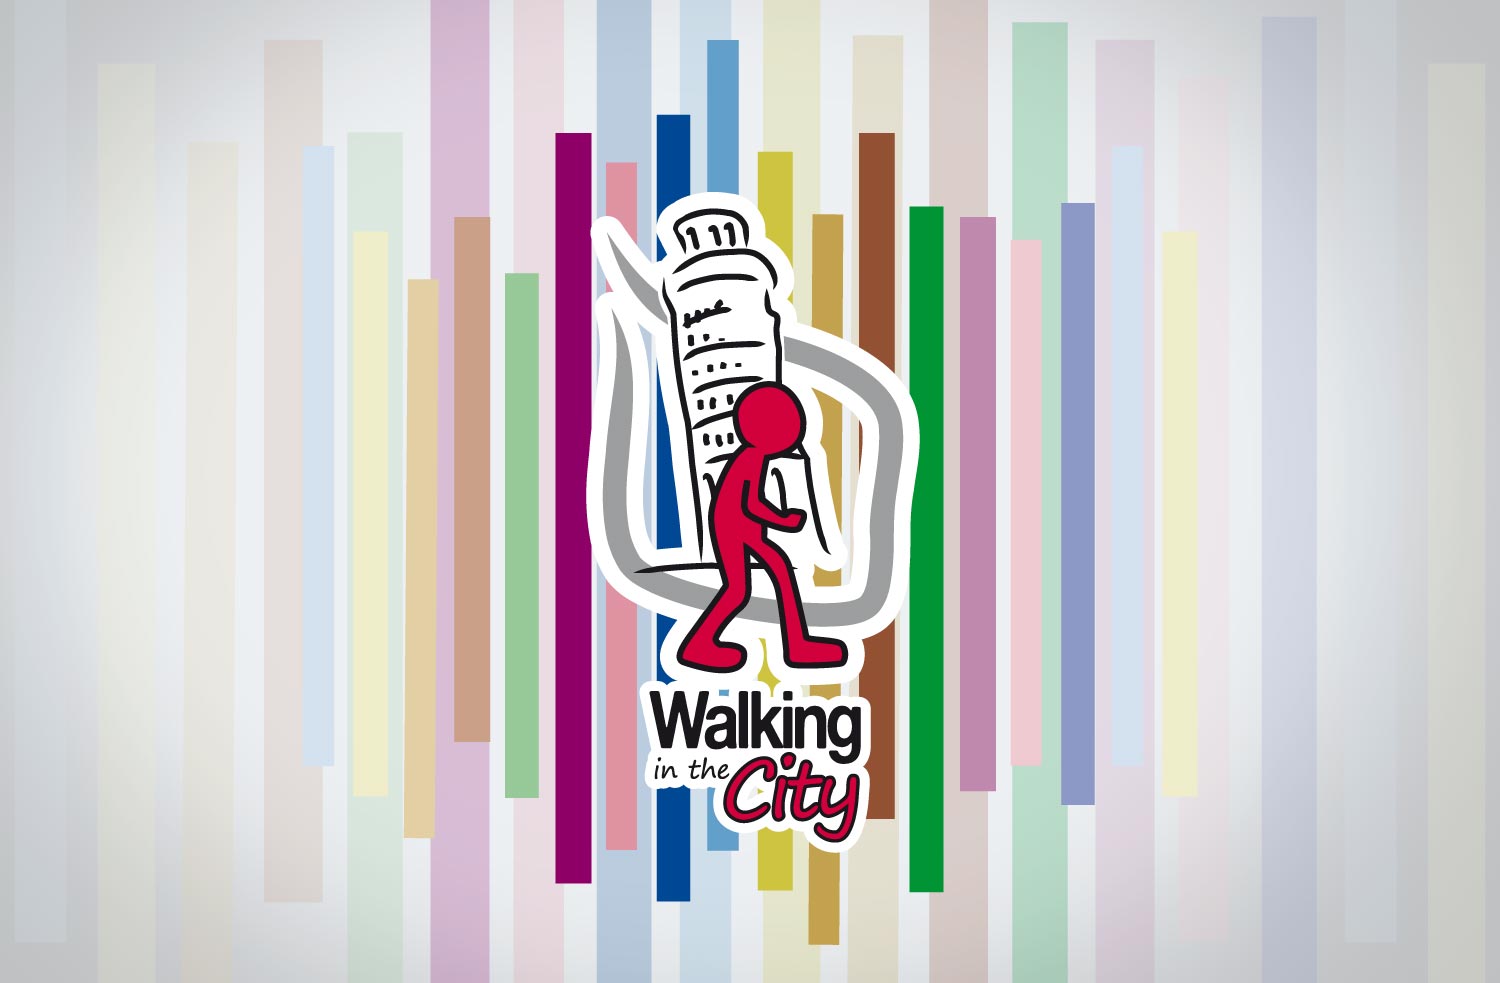 Il logo "Walking in the City"